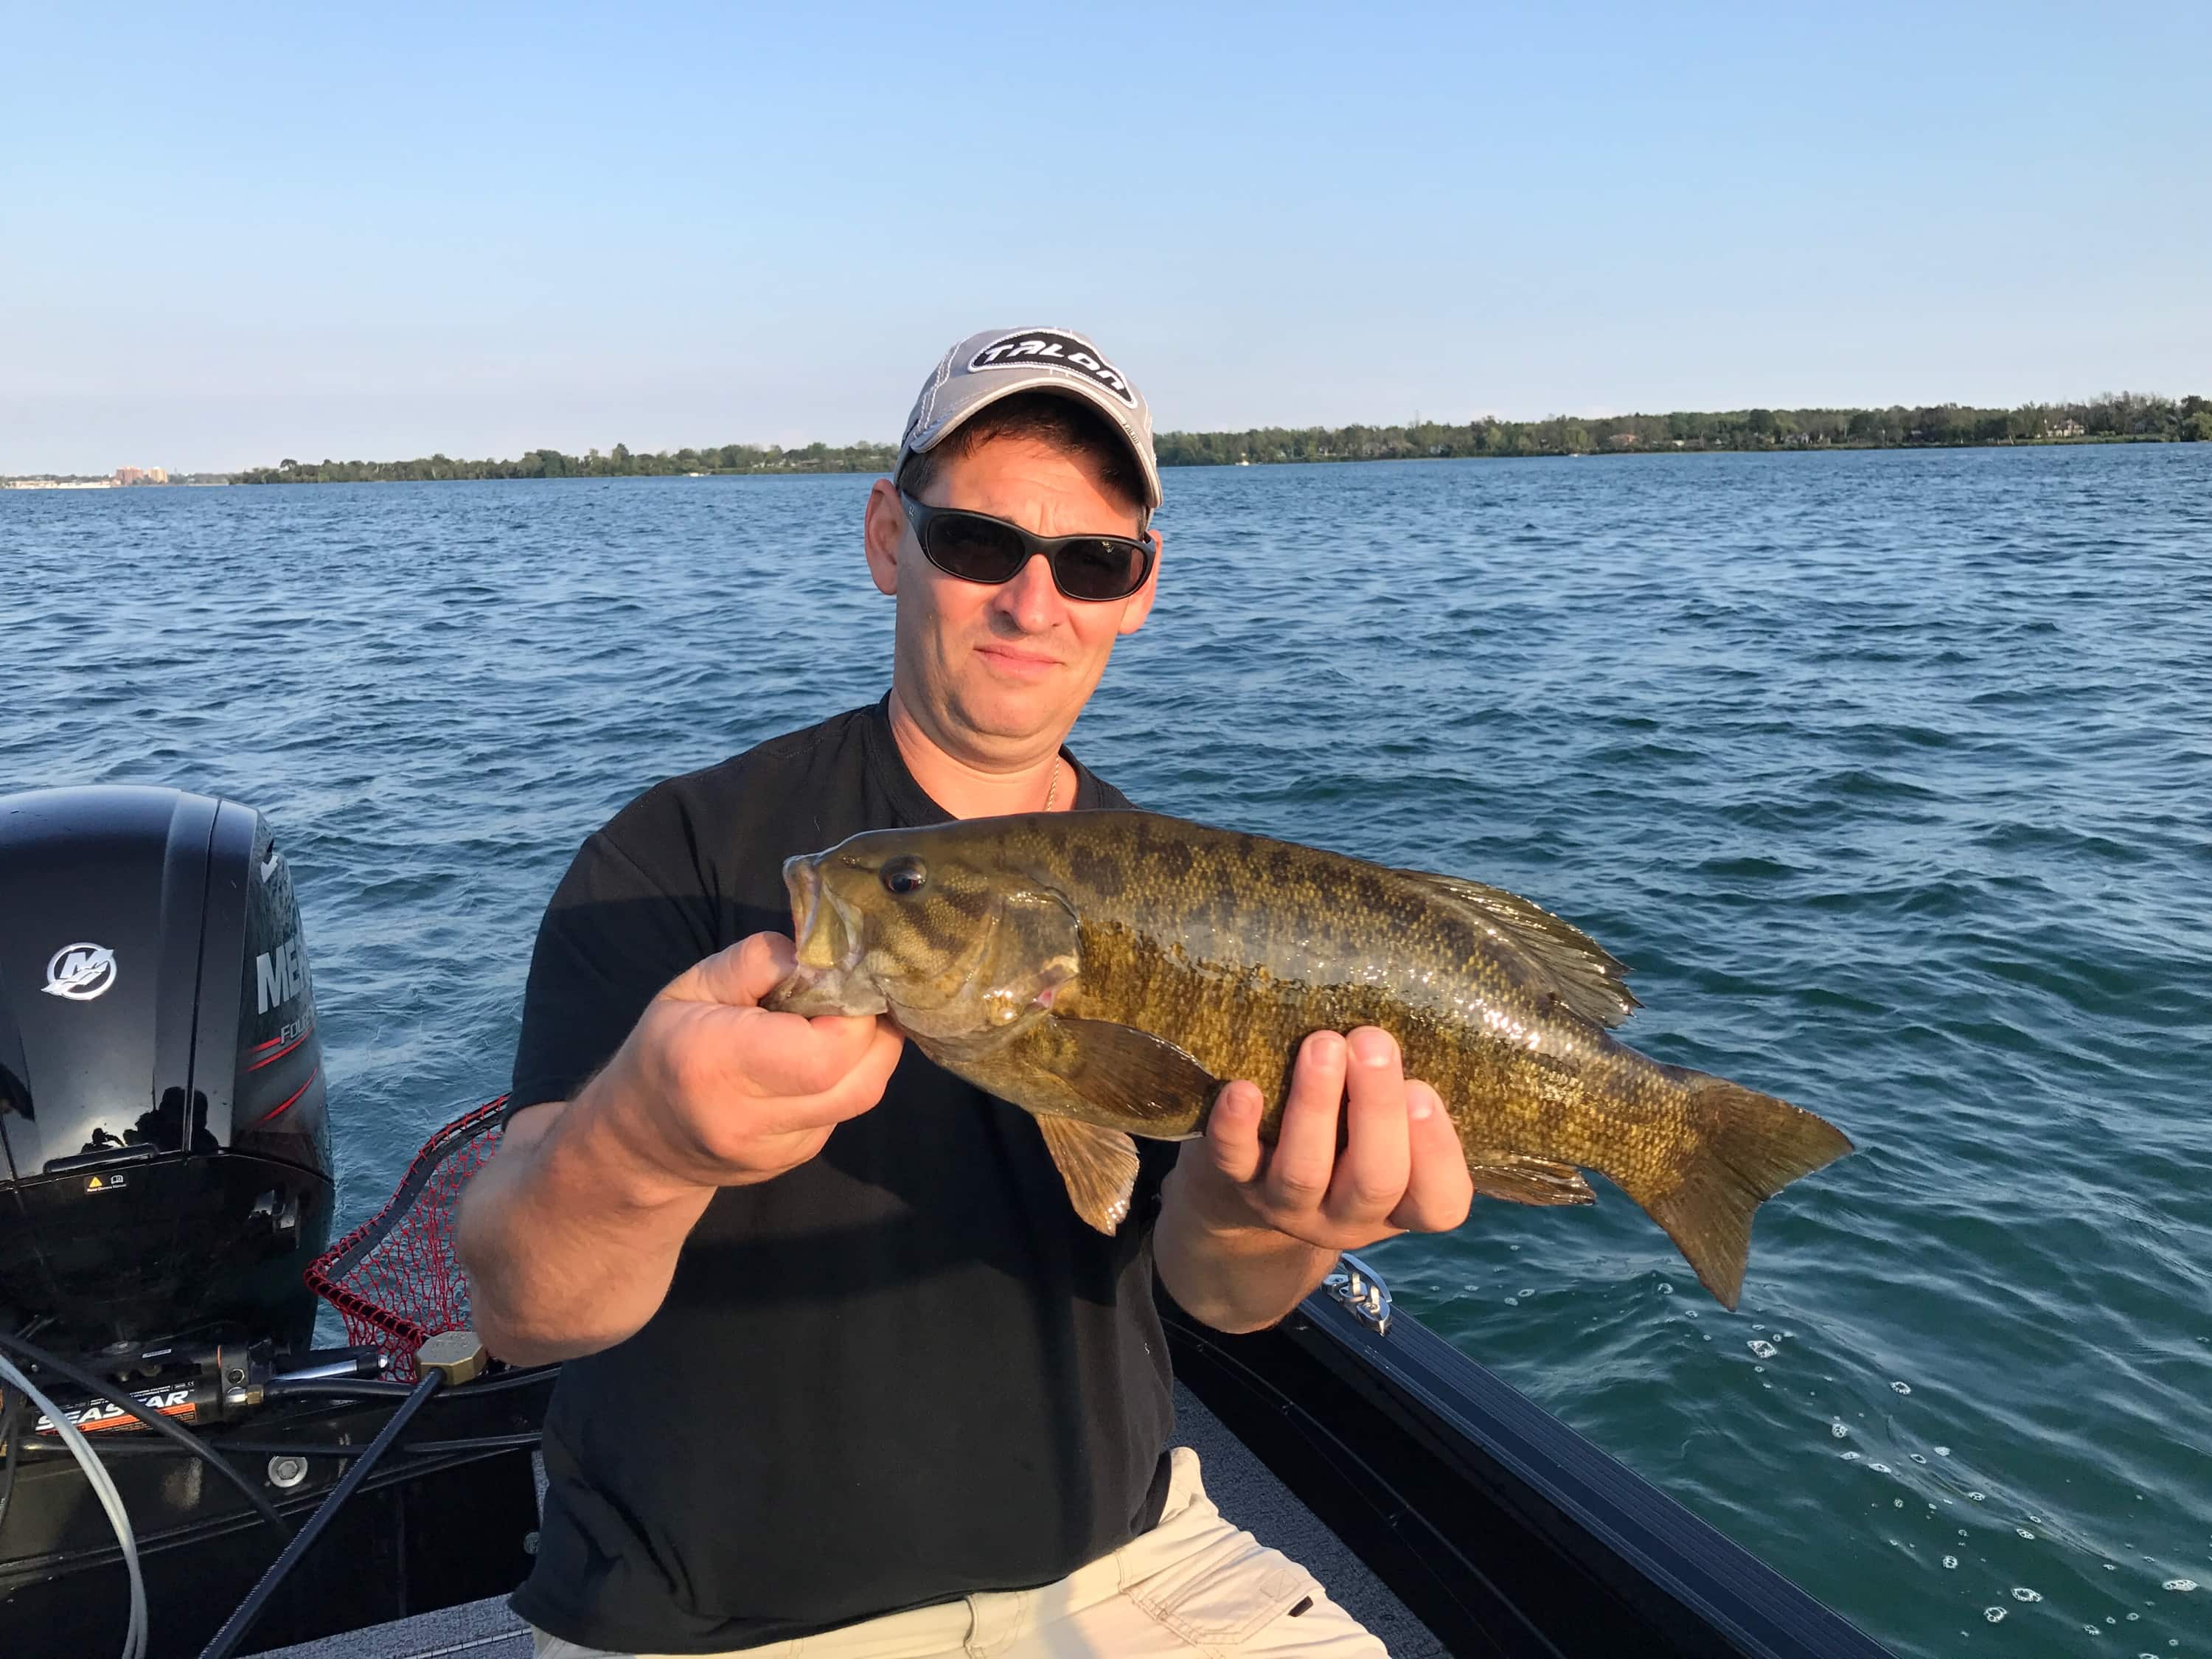 IMG 1299 - Summer Fishing in Buffalo Niagara